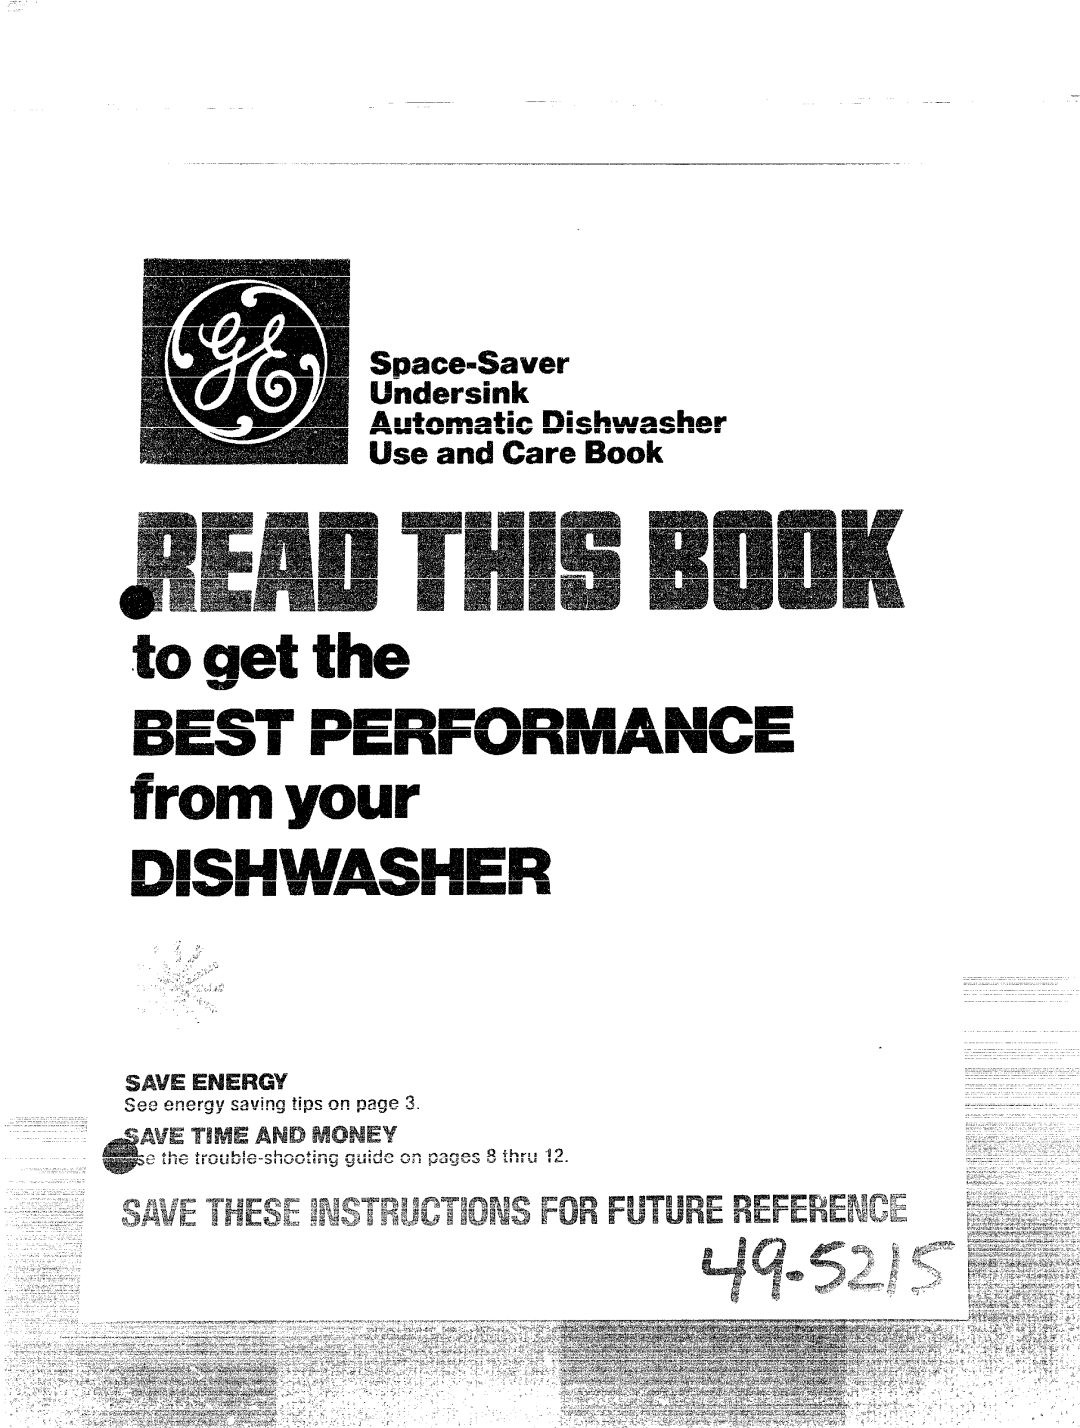 GE 49-5215 manual toget, BESTPERFORMANCE Tromyour DISHWASHER, Undersink AutomaticDishwasher UseandCareBook, Space”saver 